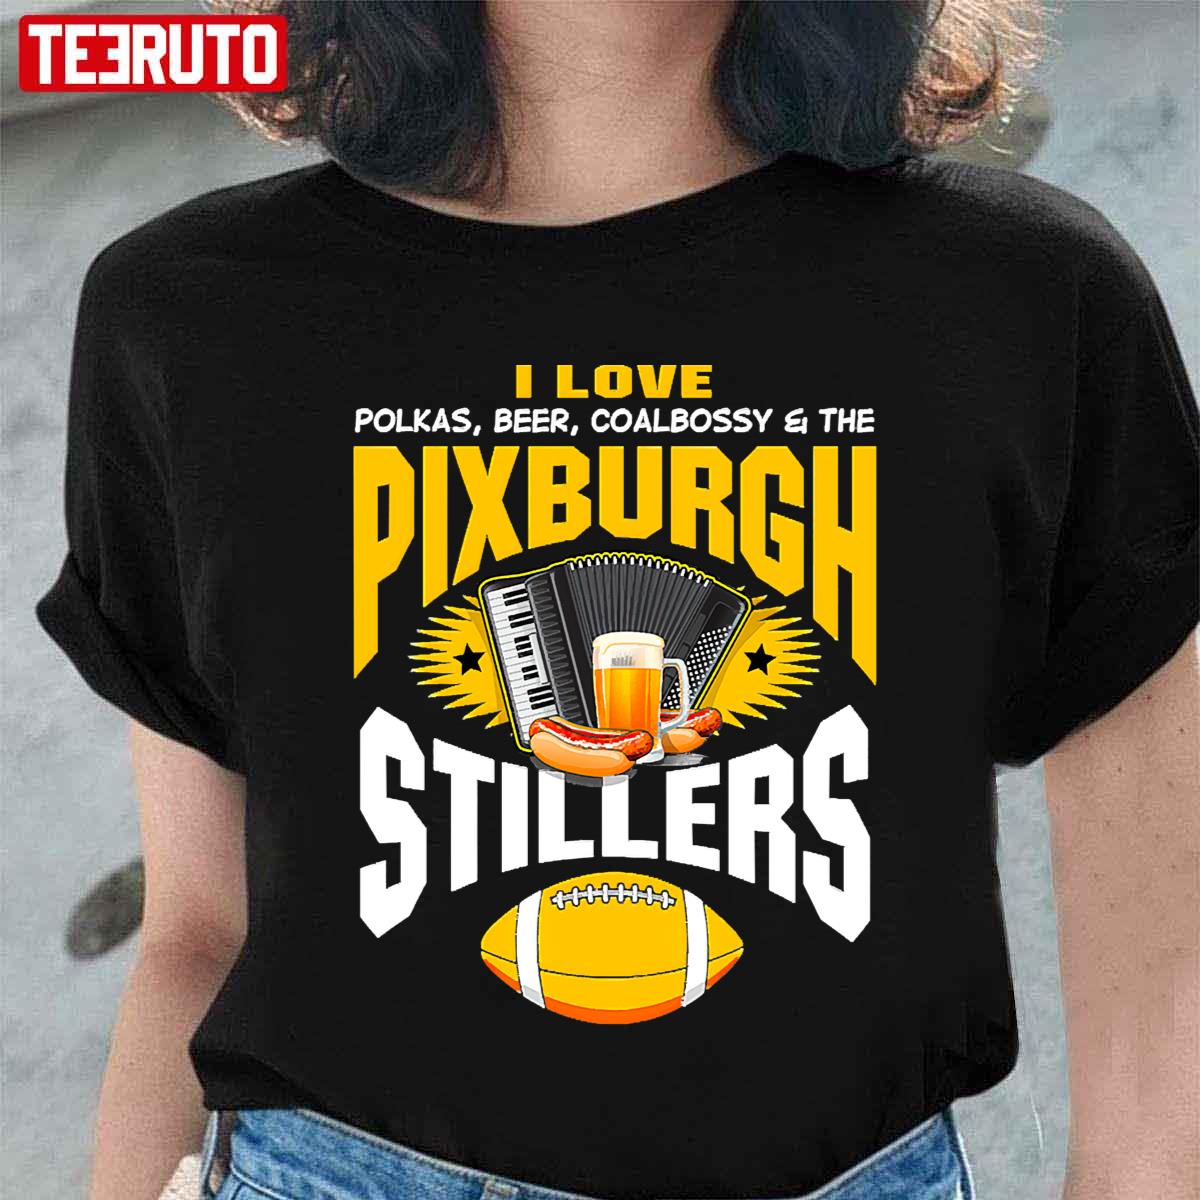 pittsburgh steelers denim shirt